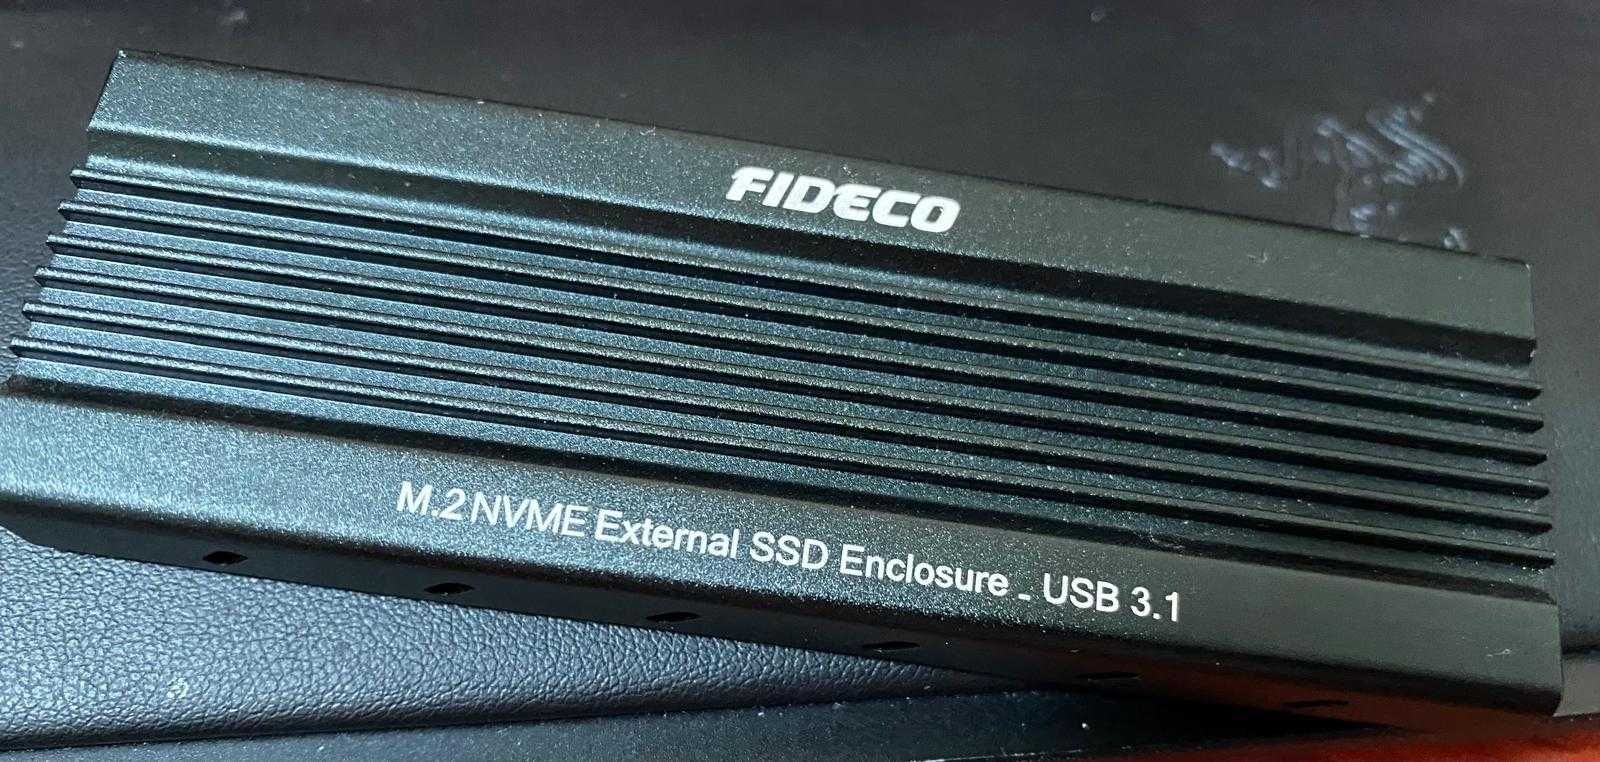 FIDECO - Carcasa SSD M.2 PCIe SATA USB 3.1 SSD Enclosure